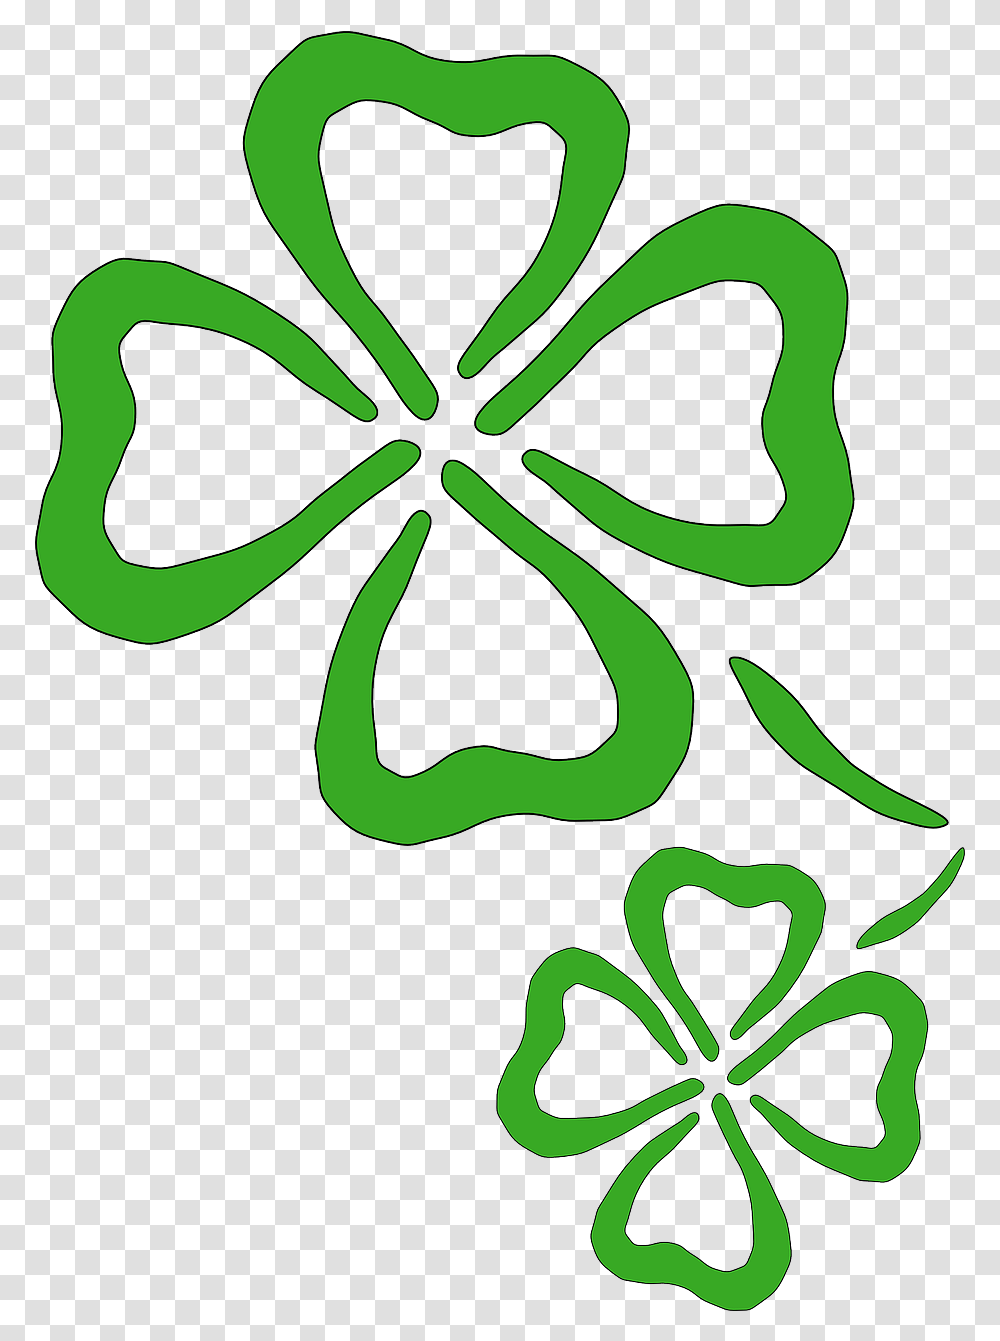 Four Leaf Clover Green Luck Free Vector Graphic On Pixabay Two Four Leaf Clover, Pattern, Floral Design, Graphics, Art Transparent Png